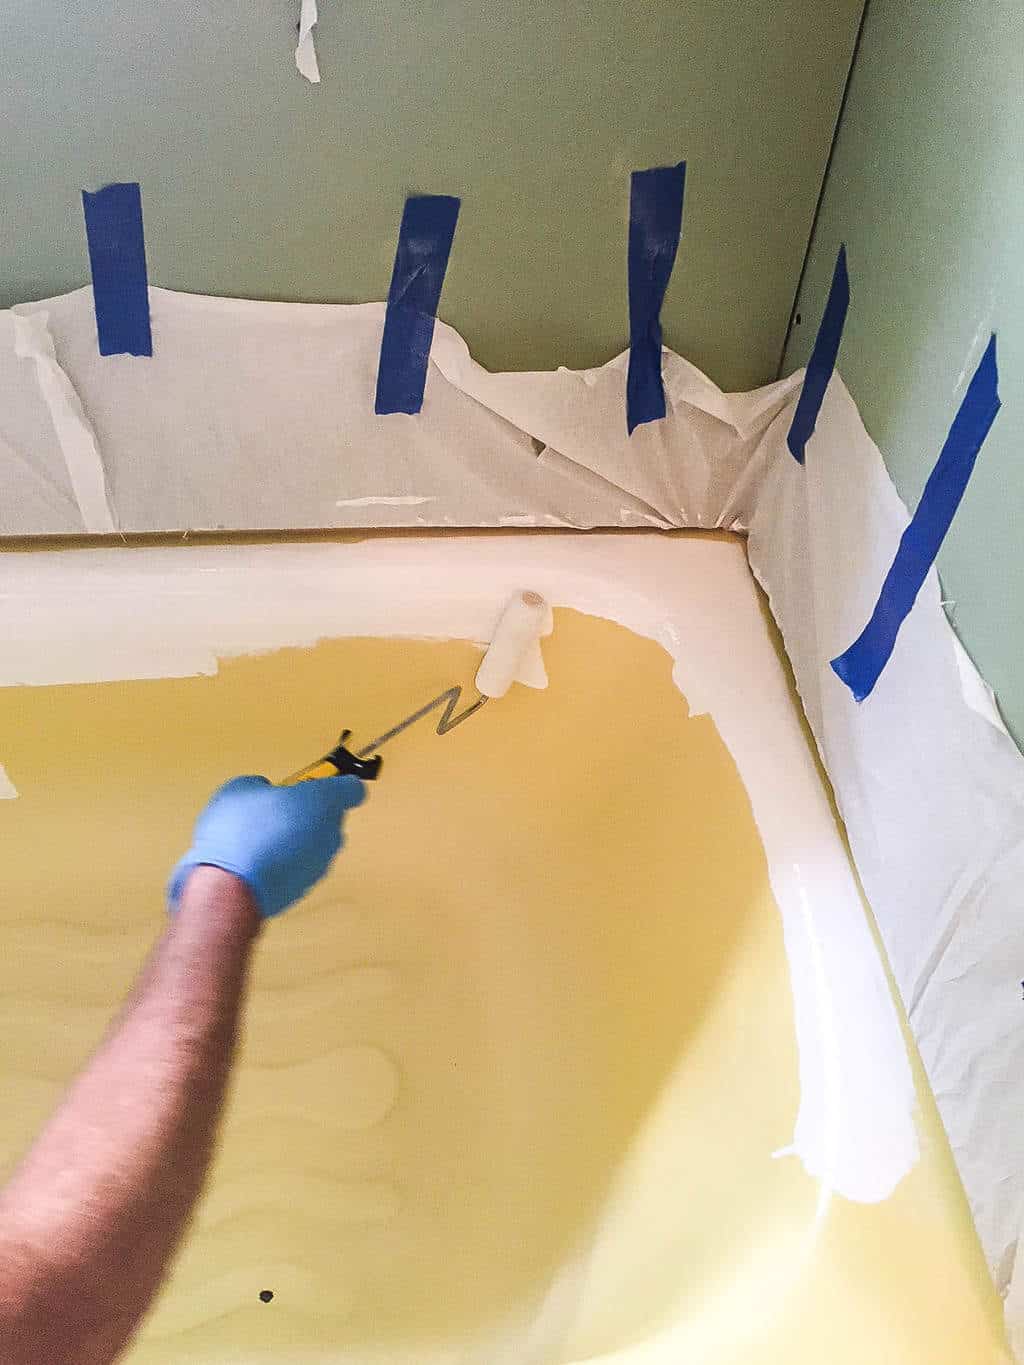 How To Paint A Bathtub Easily, Can You Paint Bathtubs